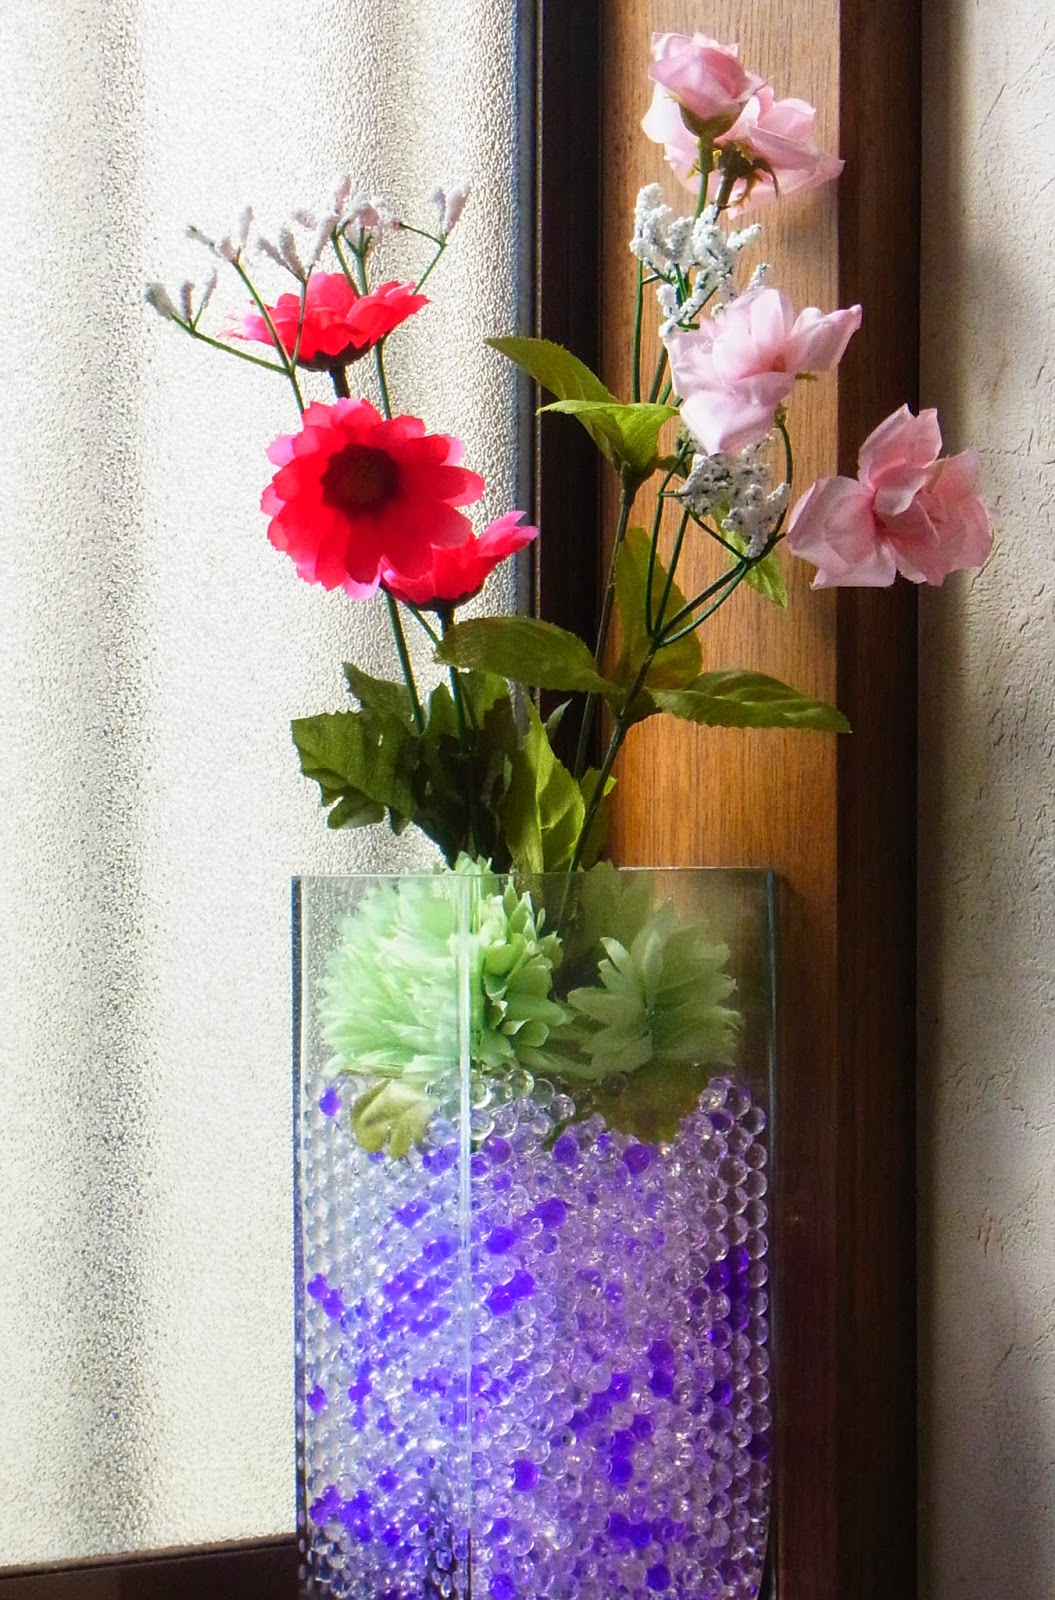 Seria セリア の造花 Ikea花瓶 虫コナーズ お片づけブログ